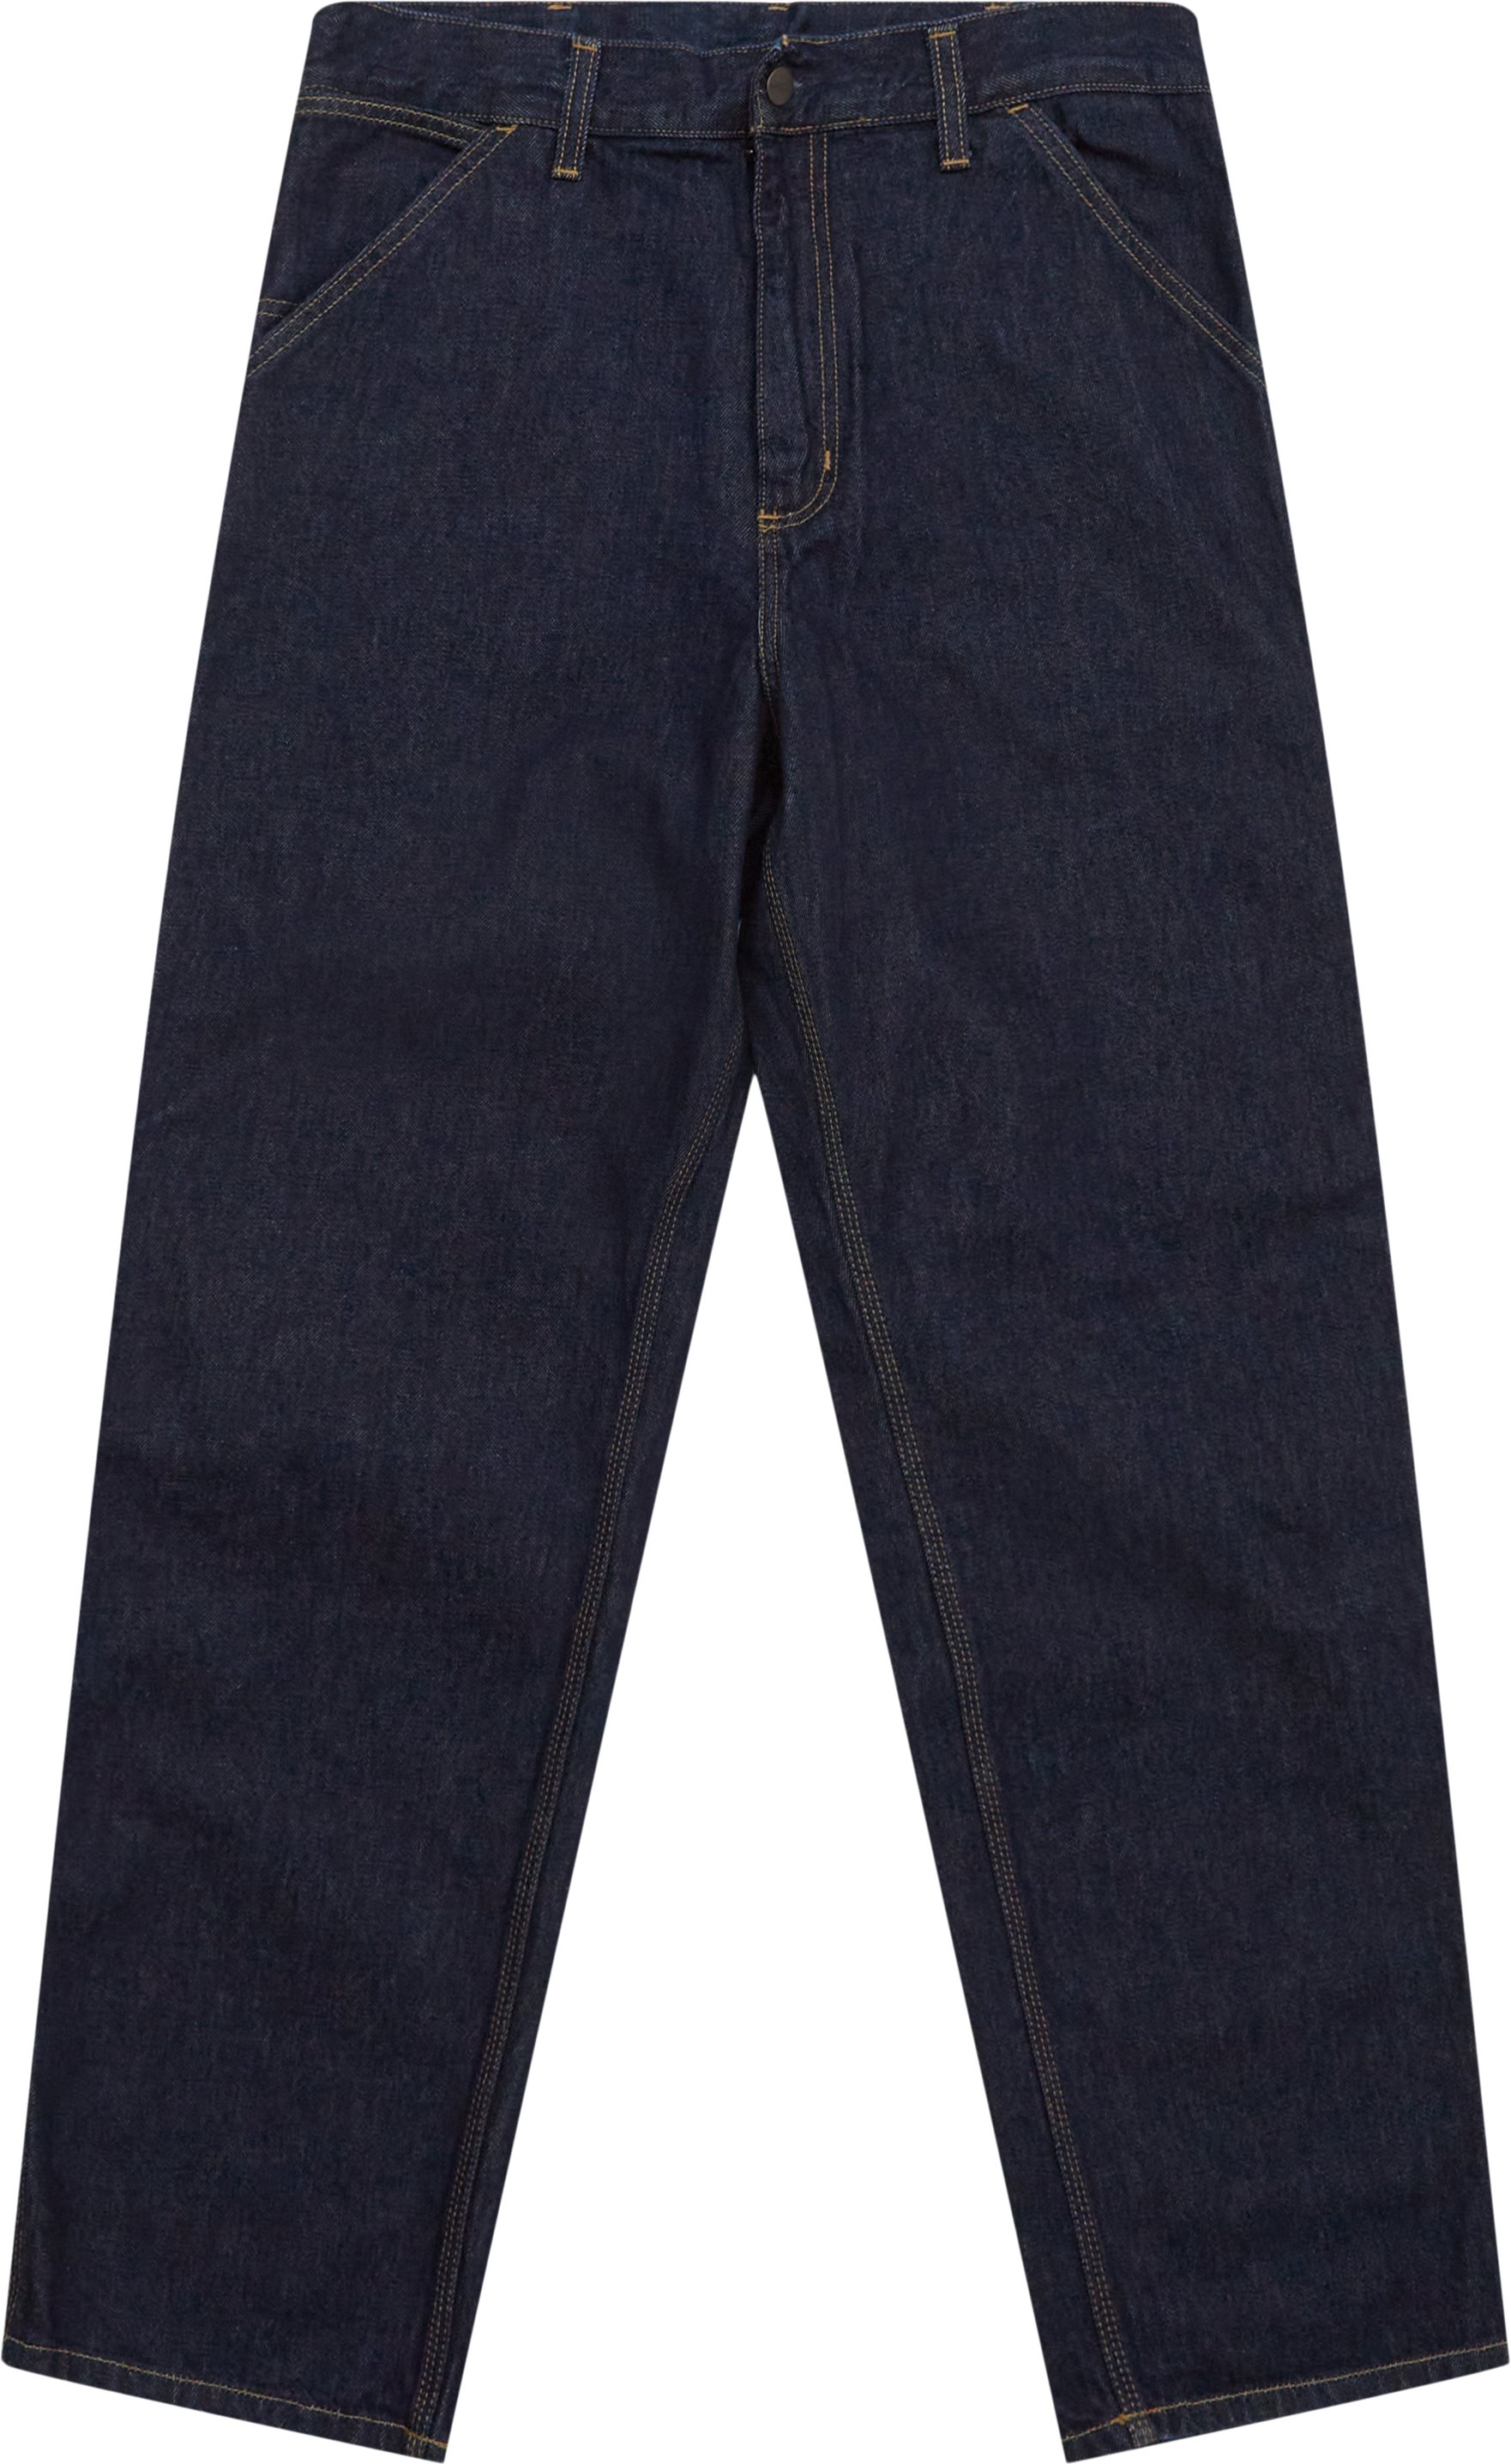 Carhartt WIP Jeans SINGLE KNEE PANT I032024.0102 Blå